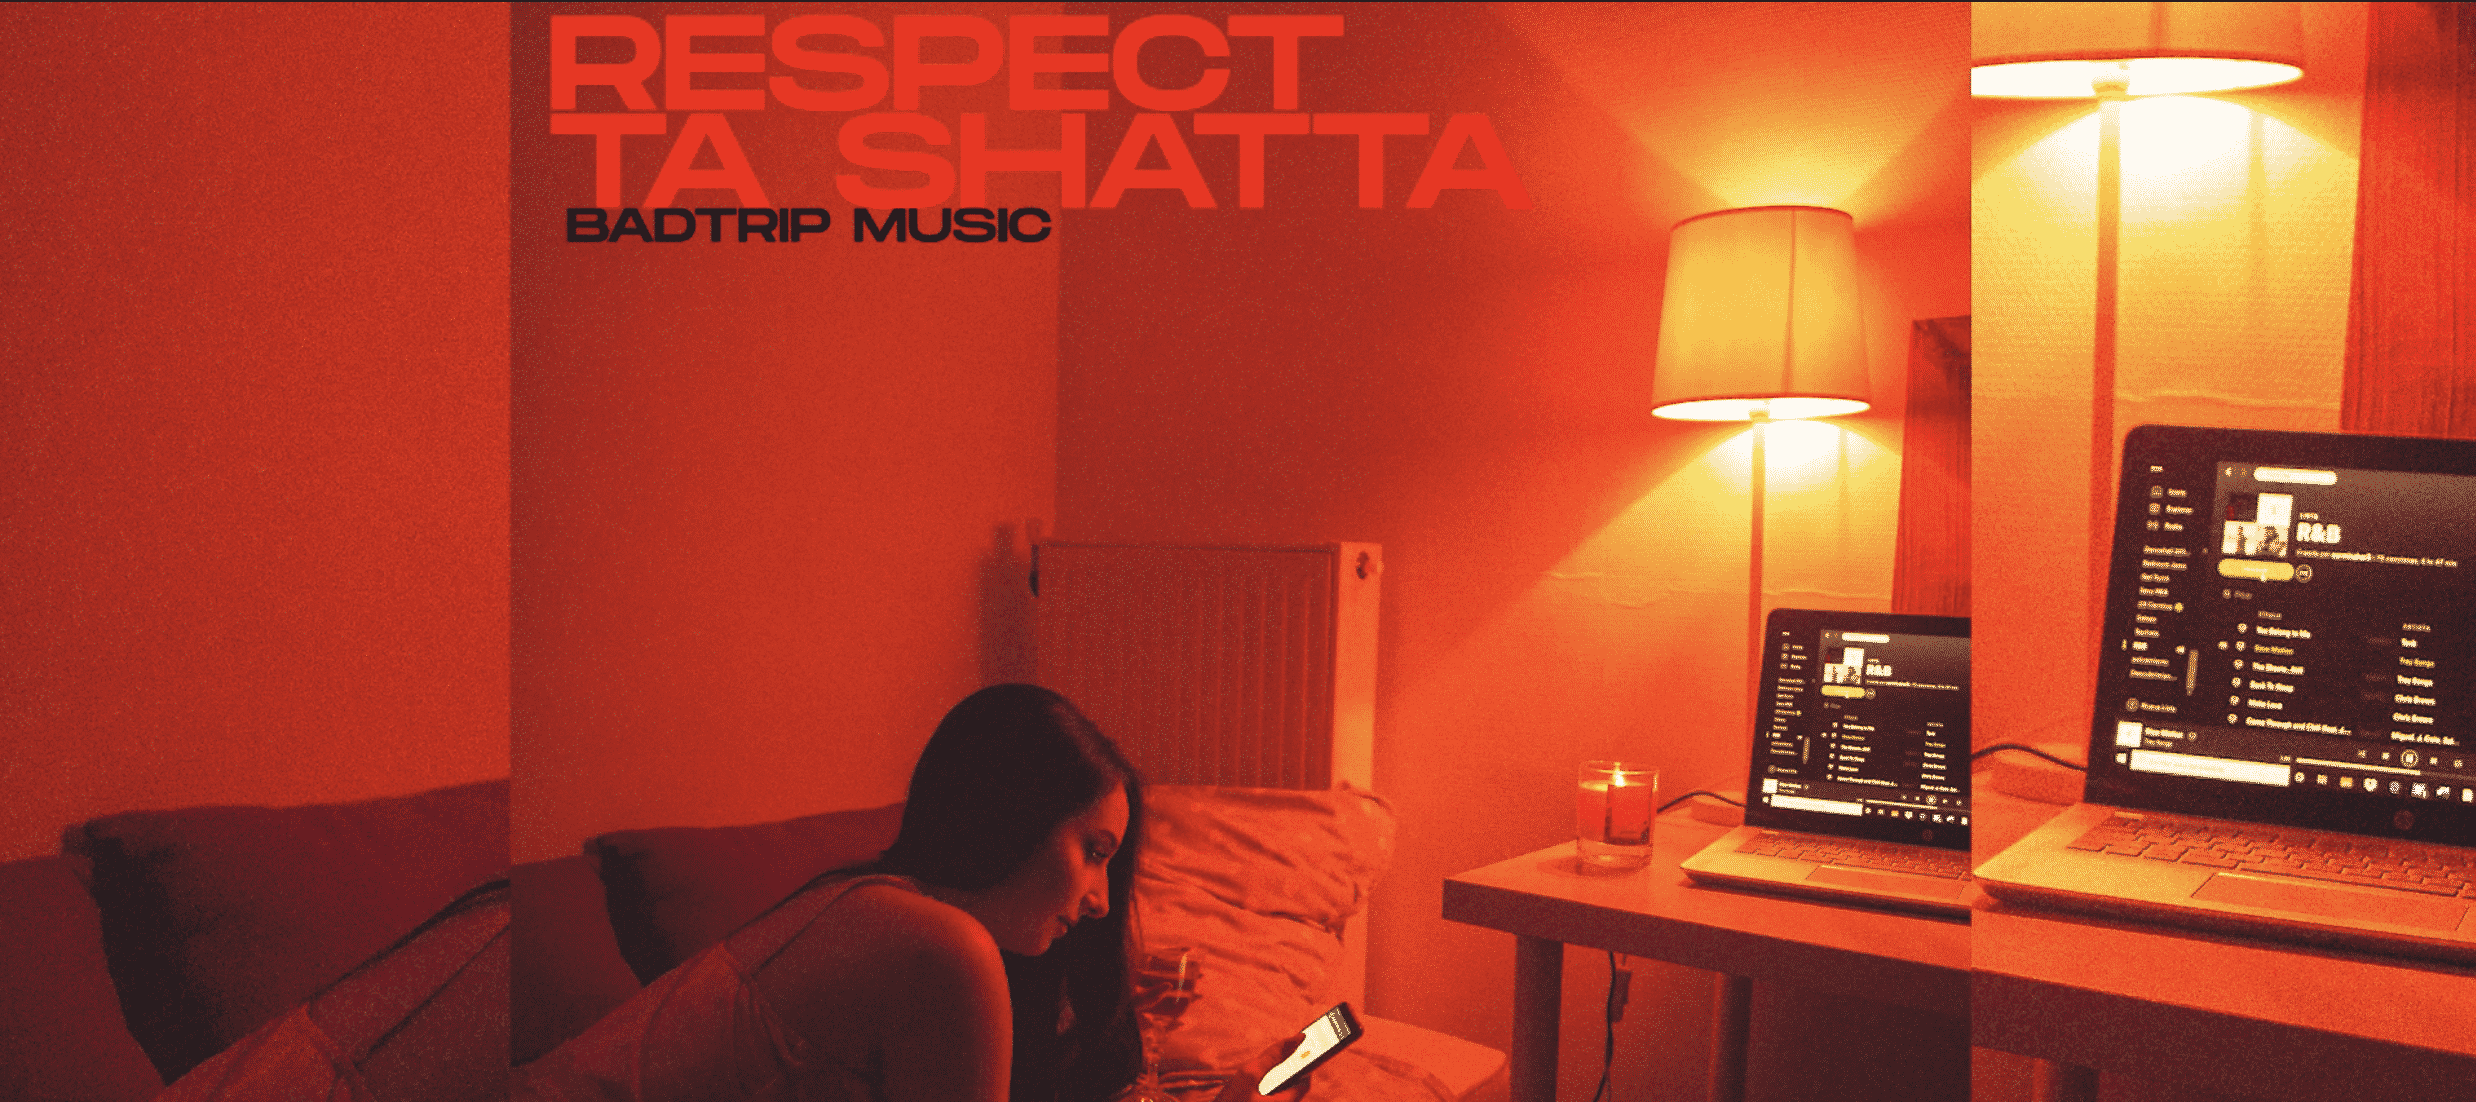 BadTrip exhorte les femmes sur "Respect ta shatta"